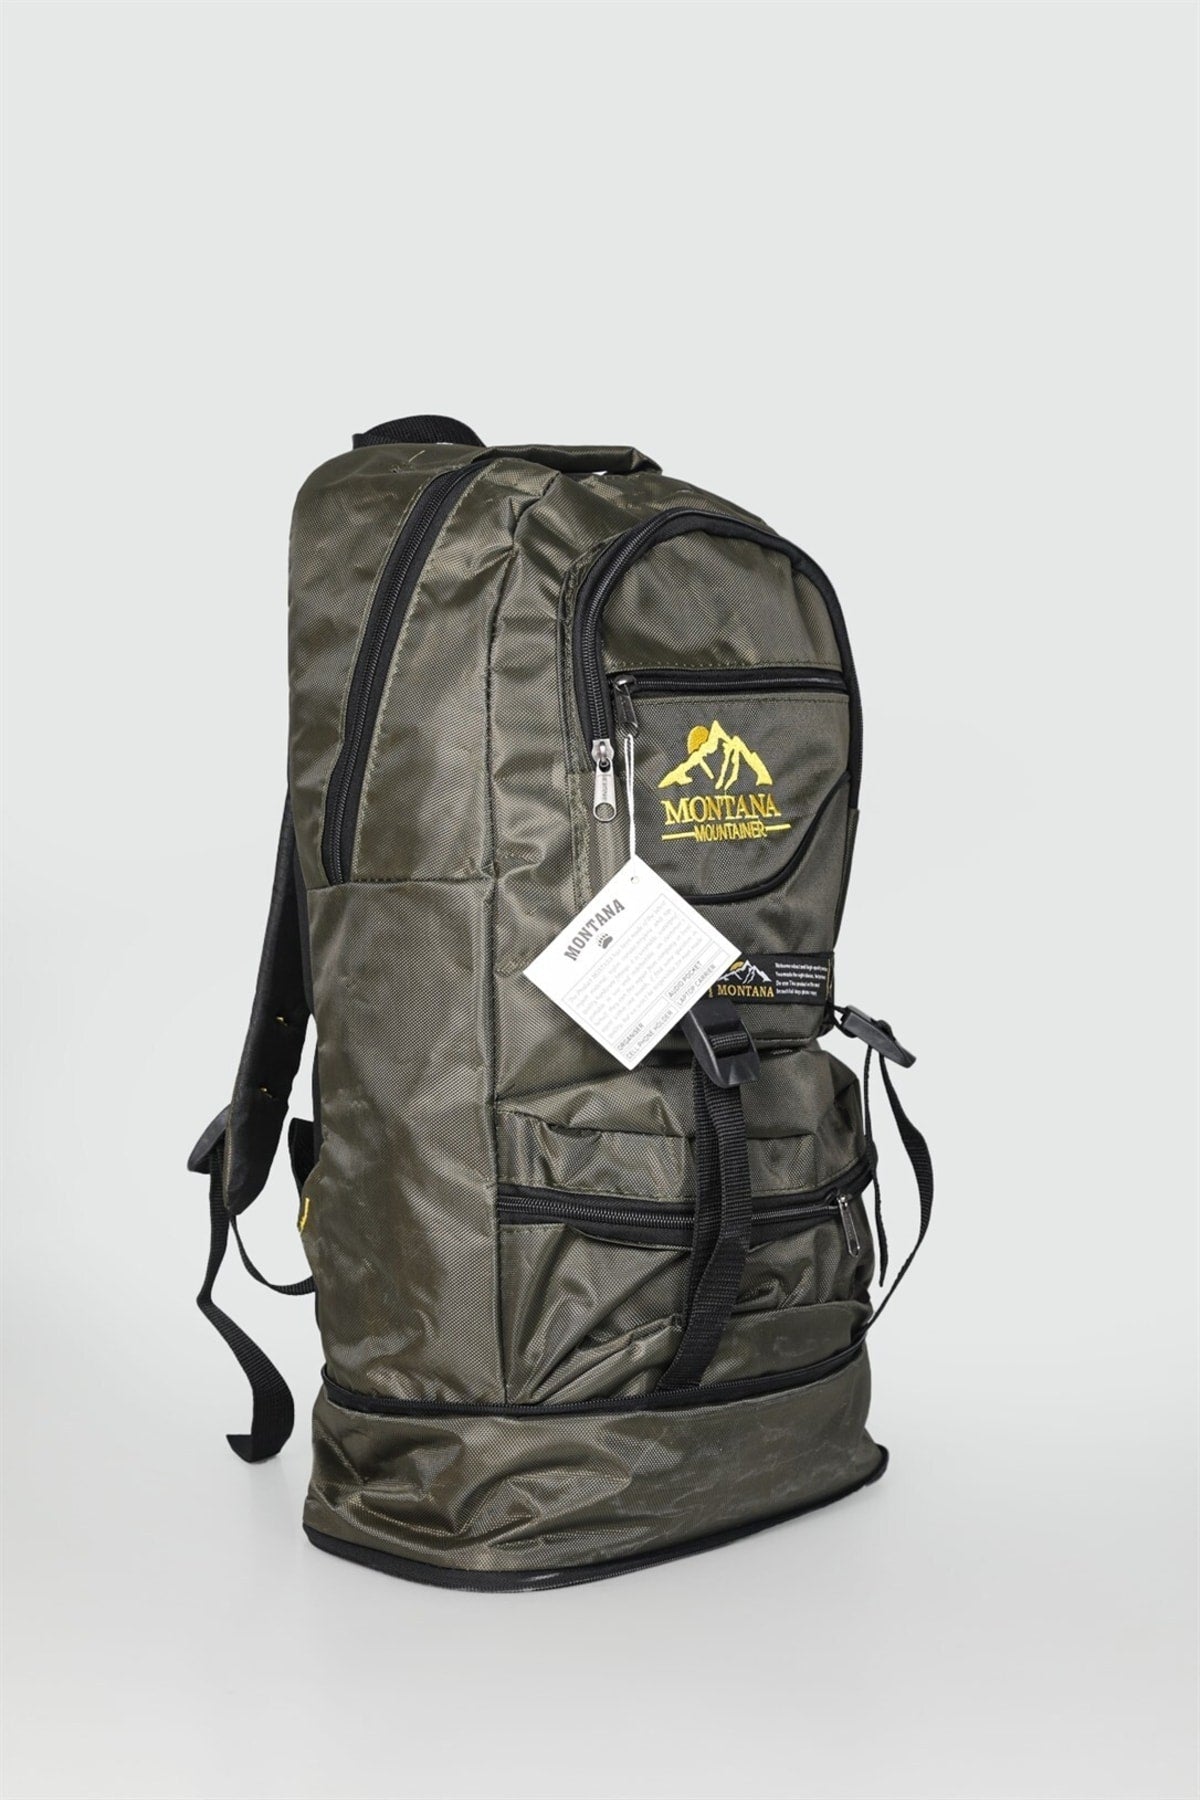 Montana 55+10 Liter Bellows Multi Eyes School-camper-travel-climber-outdoor Backpack Khaki